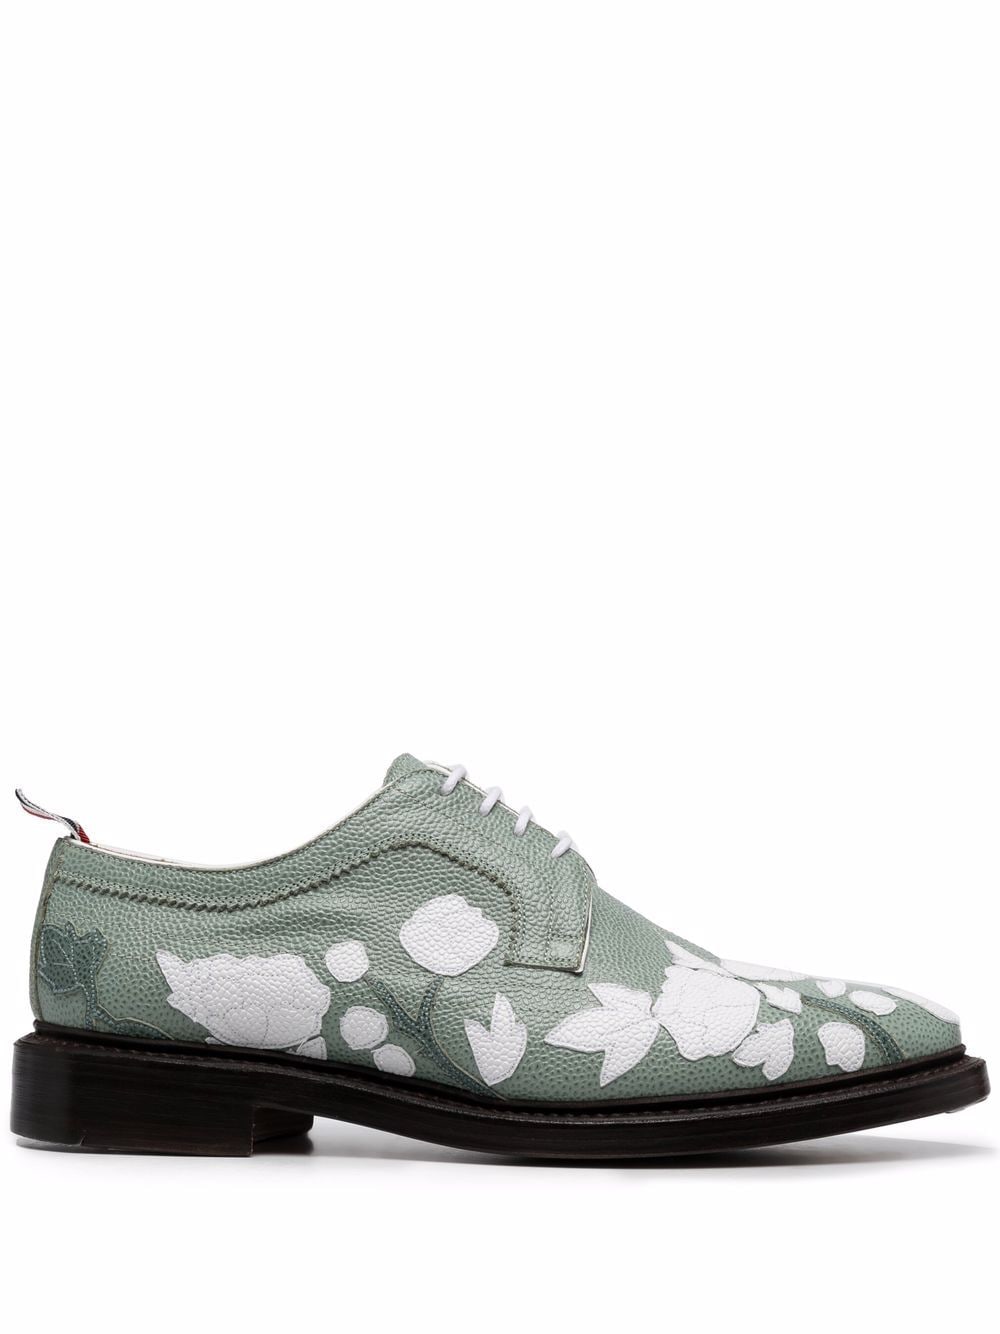 Thom Browne floral appliqué derby shoes - Green von Thom Browne